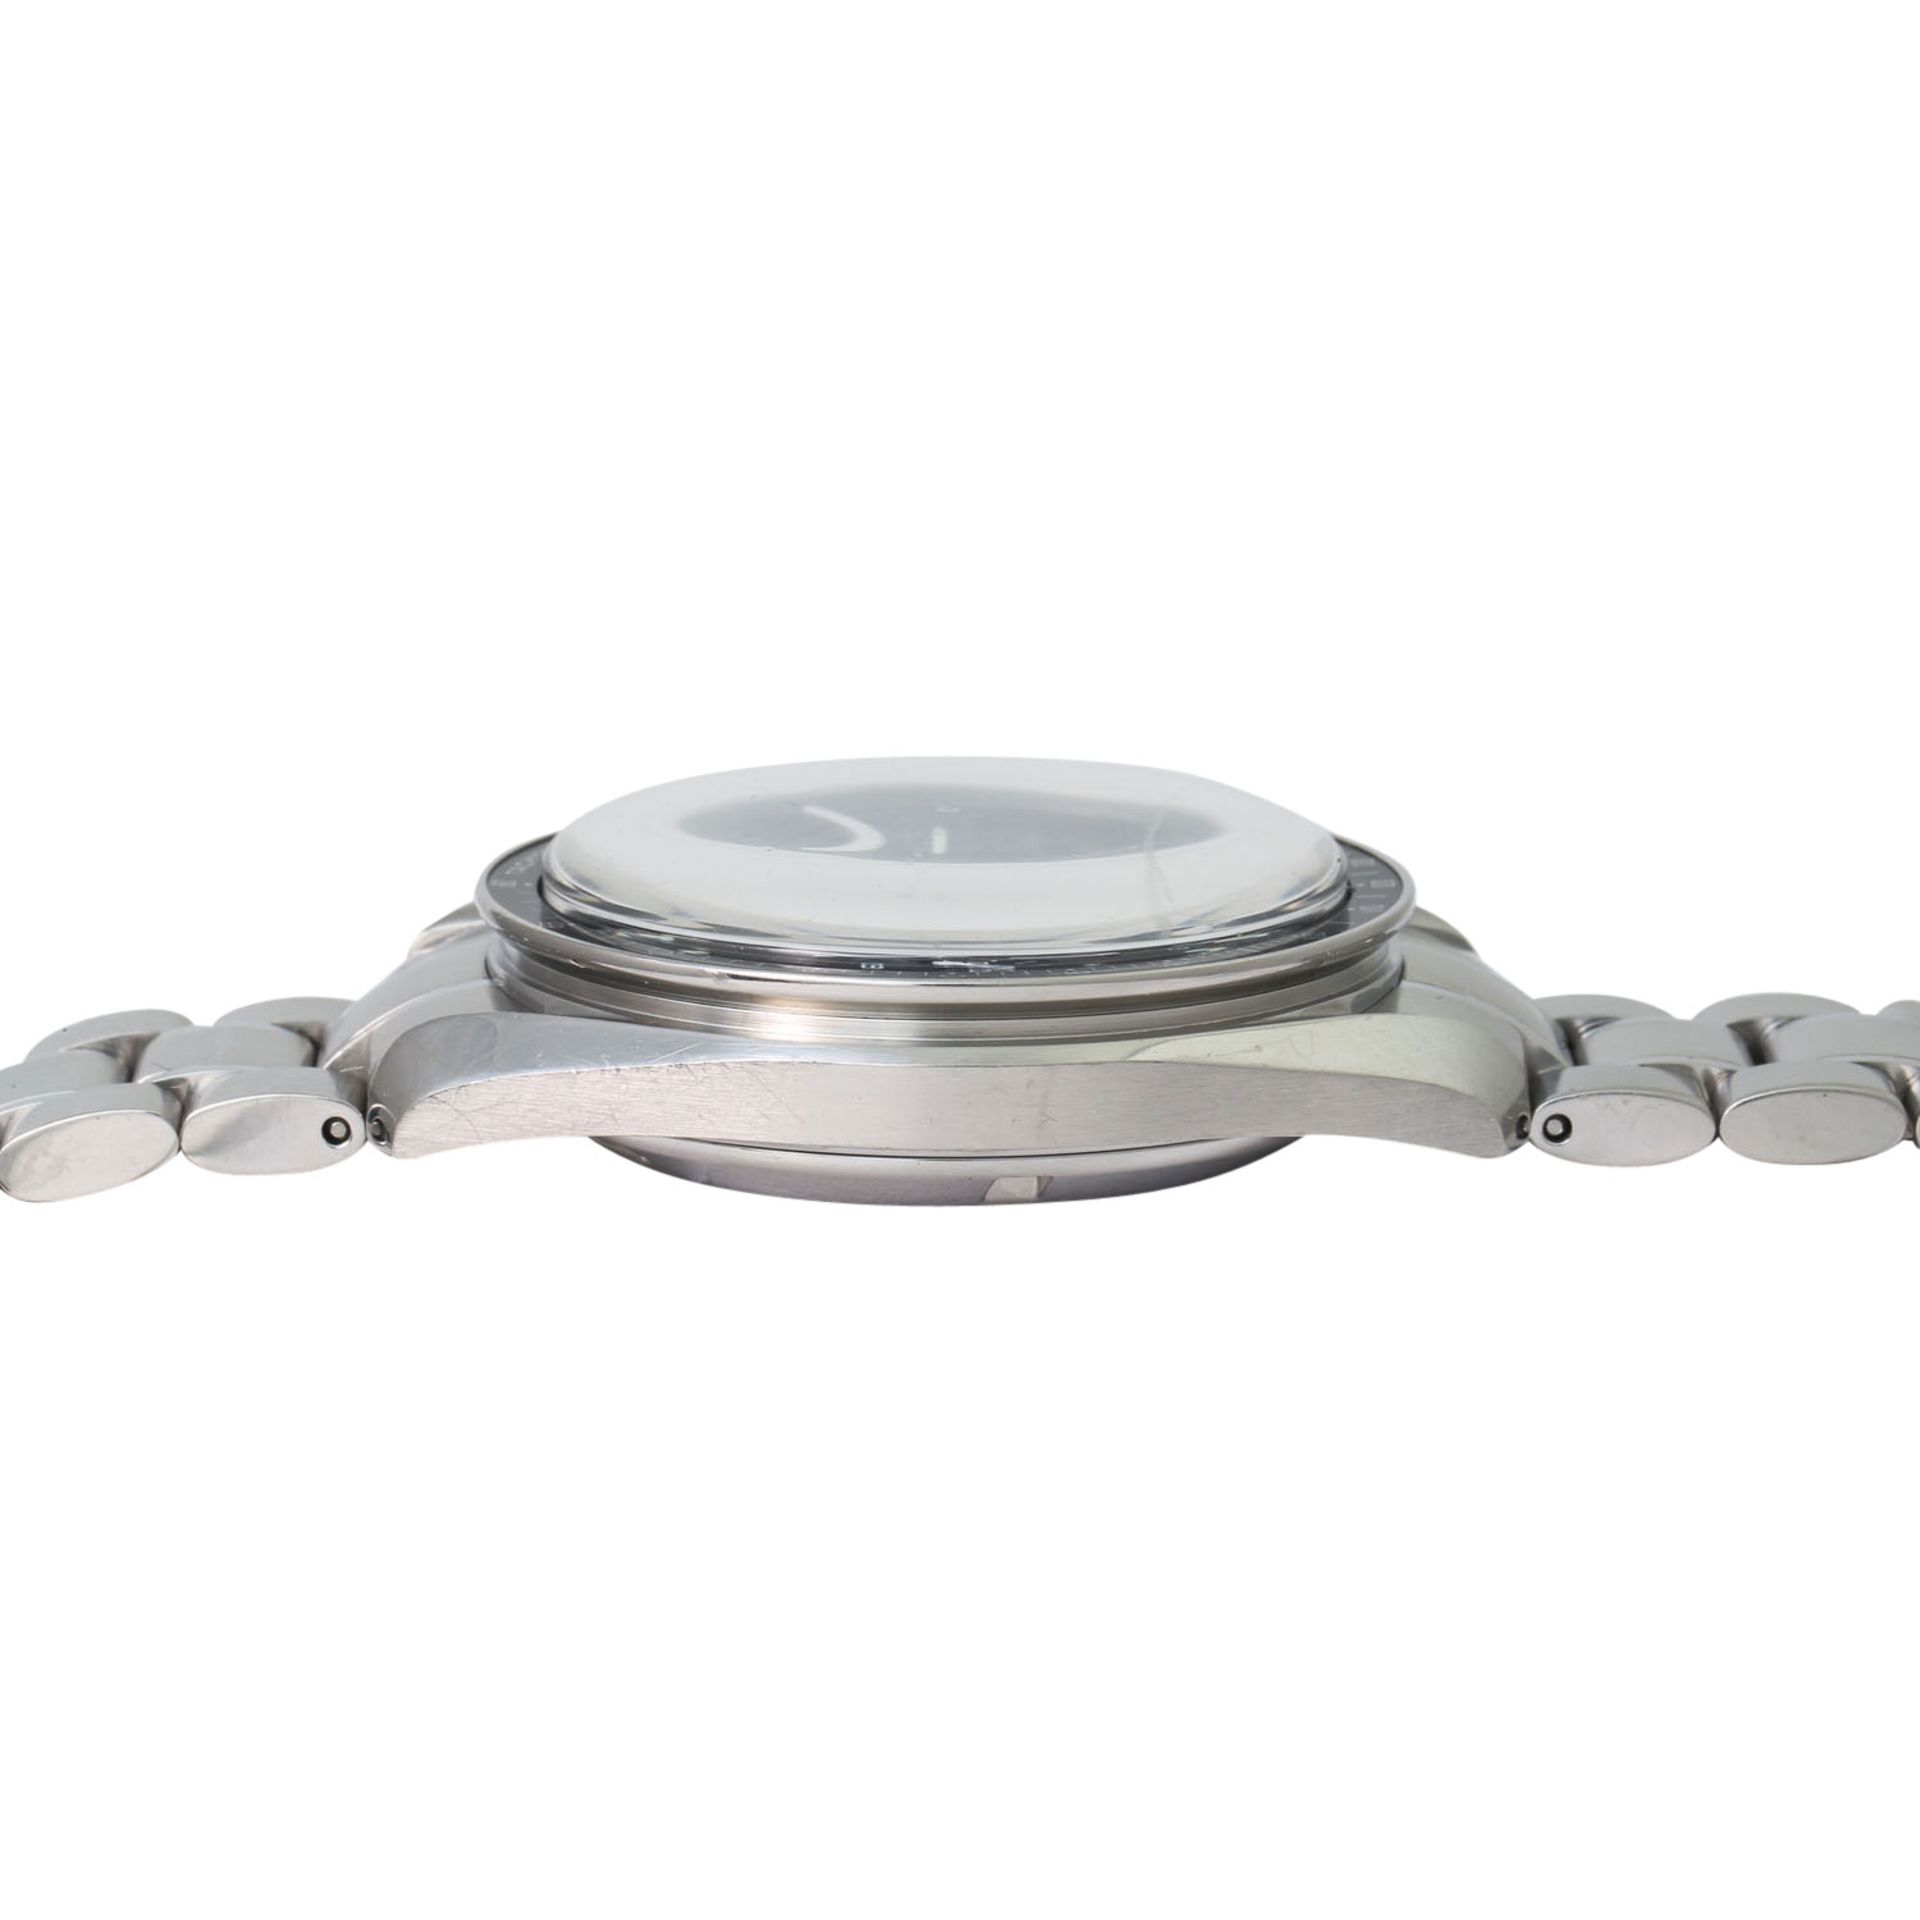 OMEGA Speedmaster Professional Moonwatch Chronograph, Ref. 3570.50.00. Armbanduhr. - Image 4 of 9